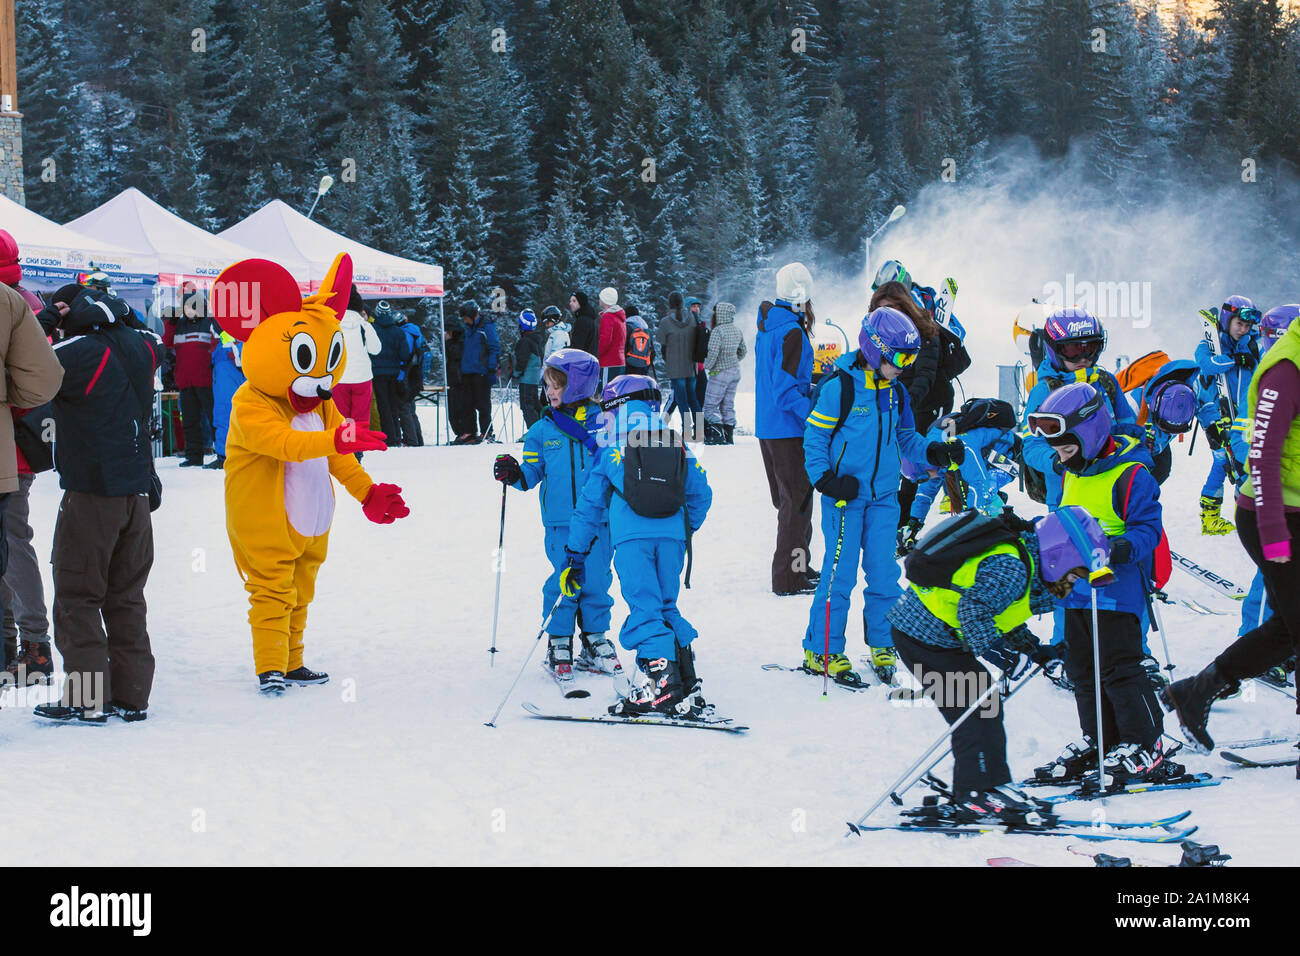 Bansko, Bulgaria - December, 12, 2015: Many young skiers preparing to ski in Bansko, Bulgaria and Mouse in Costume Stock Photo